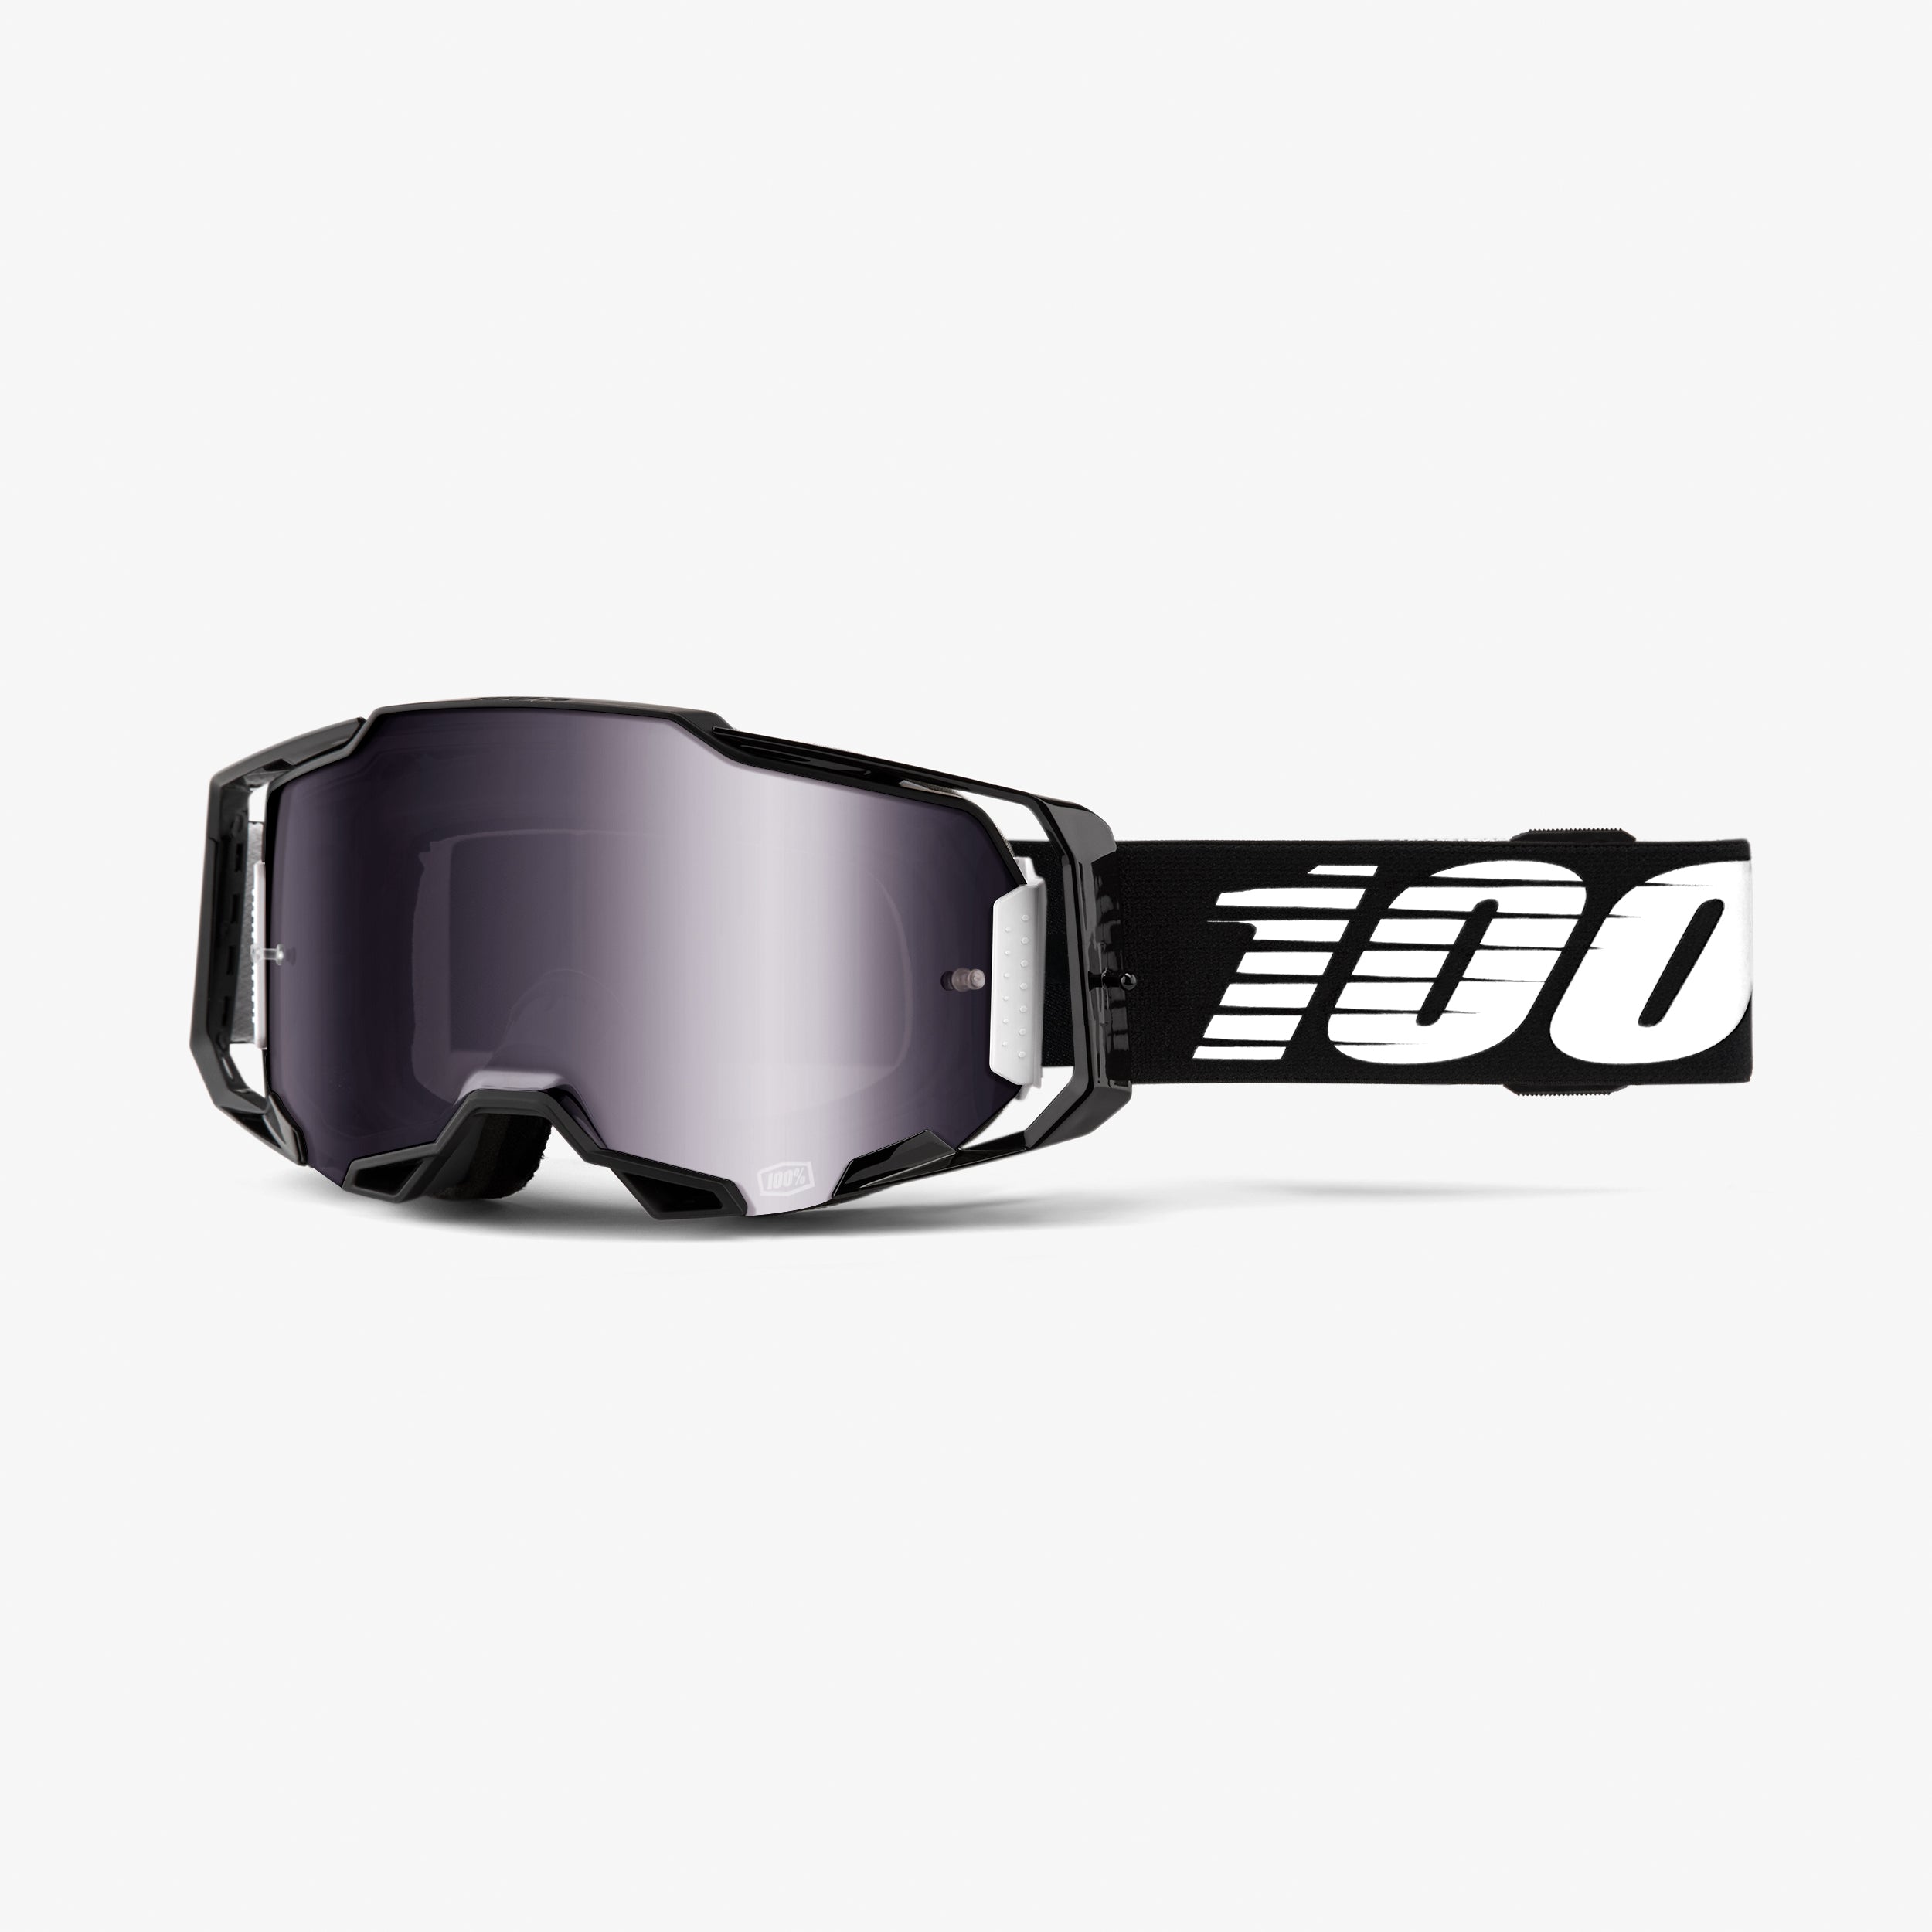 100% Armega Goggles Black, Silver Flash Mirror Lens